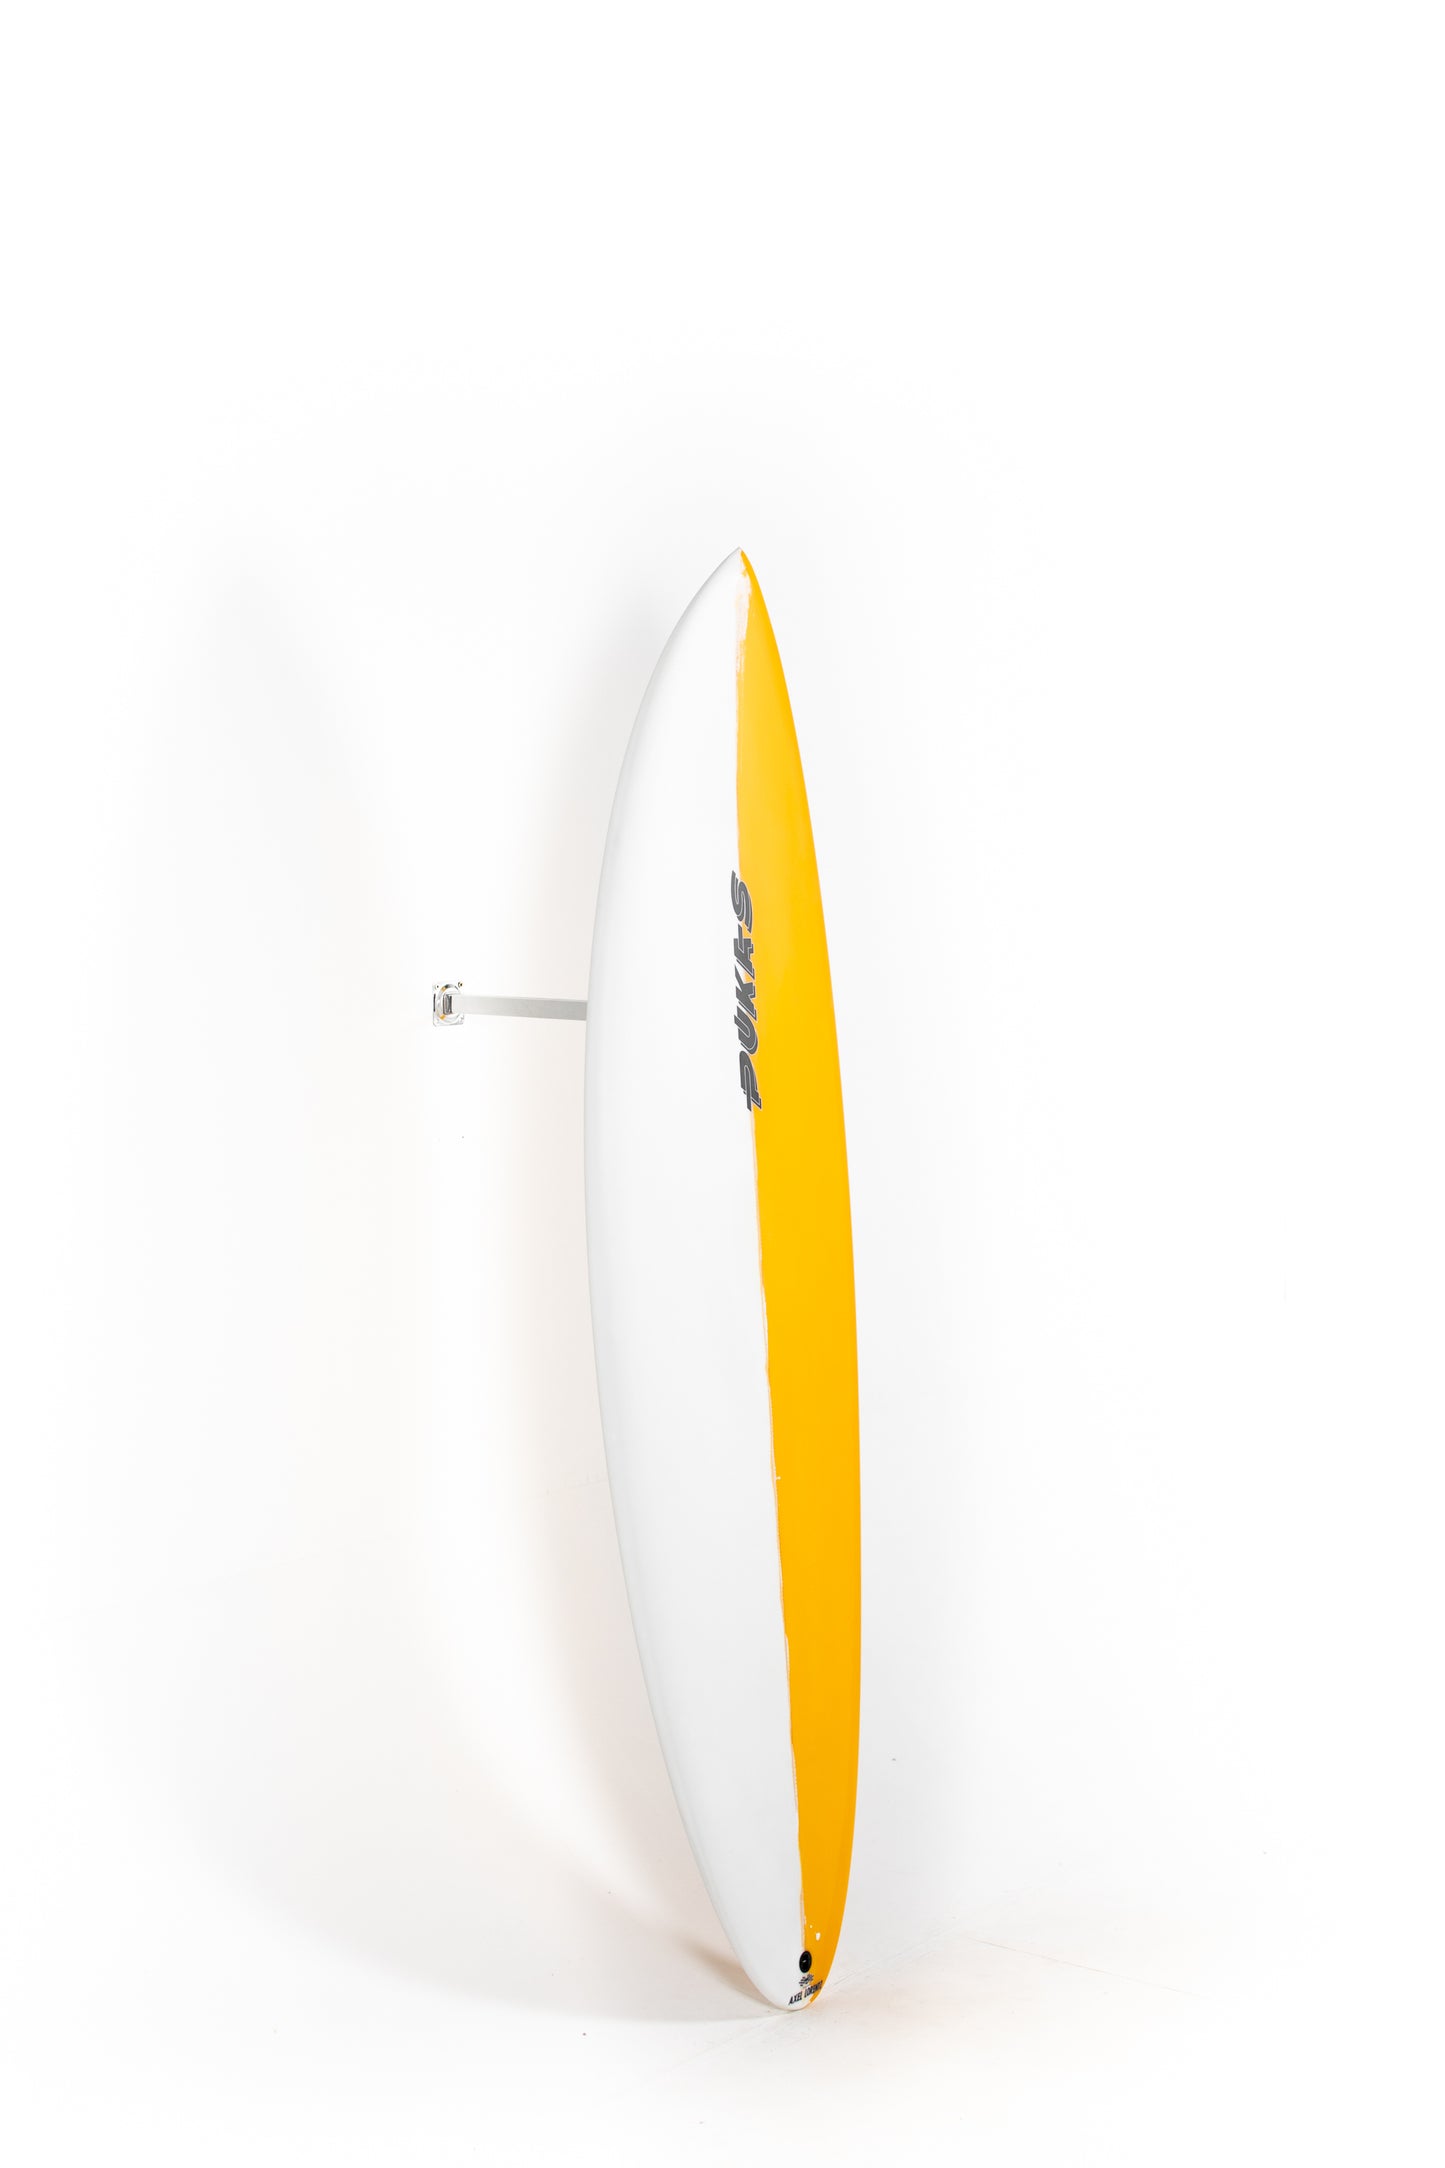 
                  
                    Pukas Surf Shop - Pukas Surfboard - ORIGINAL 69 by Axel Lorentz - 6’0” x 20,75 x 2,63 - 35,7L - AX07927
                  
                